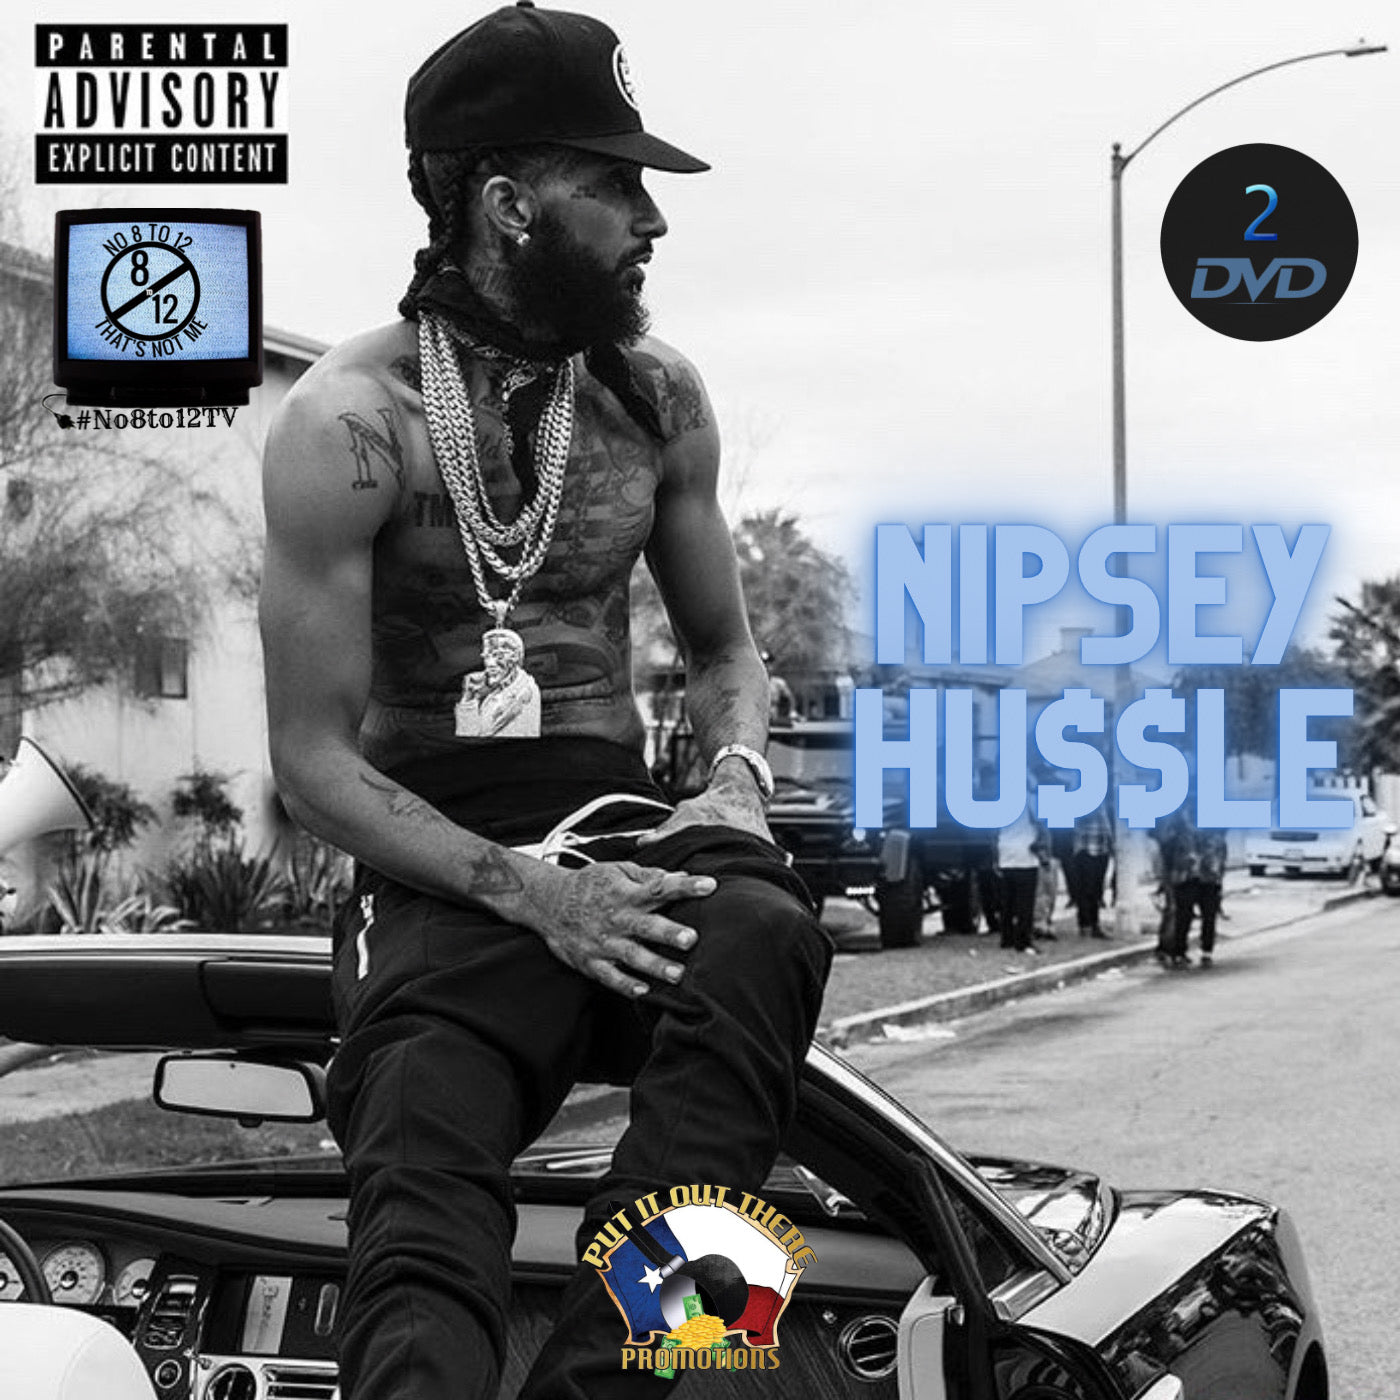 Nipsey Hussle #No8to12TV DVD (Brand New) ..50 Rap & Hip Hop Videos ..2 Disc set